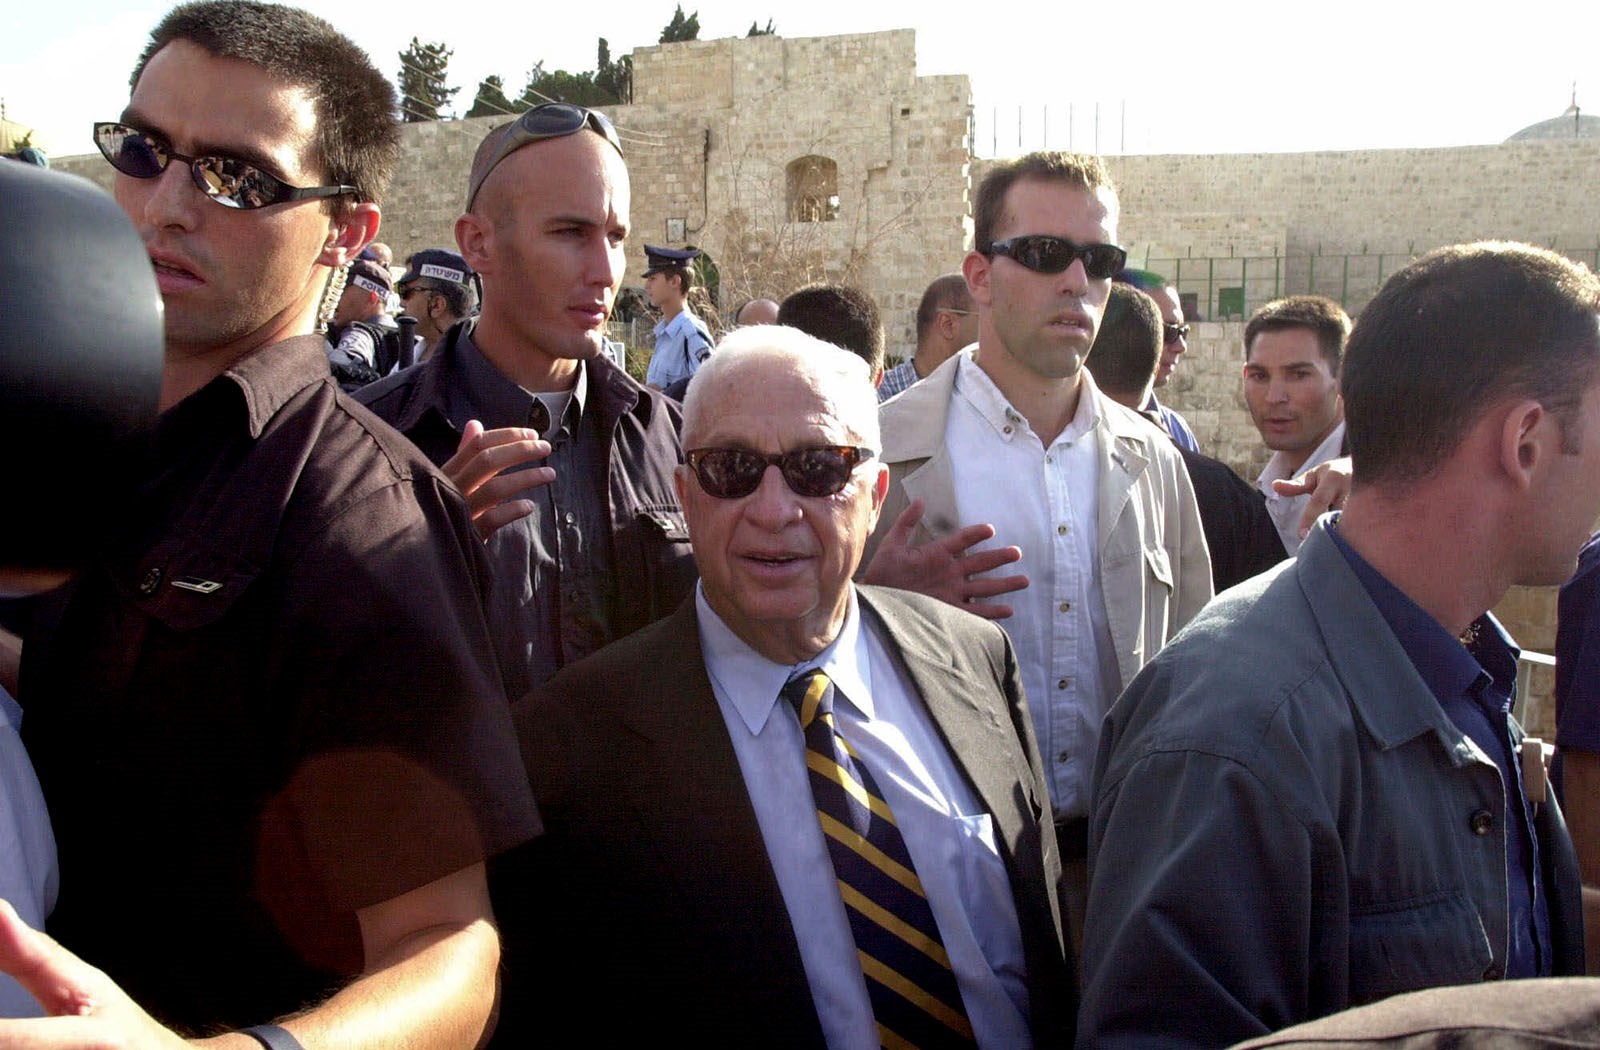 Second Intifada - Sharon's Visit to Temple Mount Photo (2000)